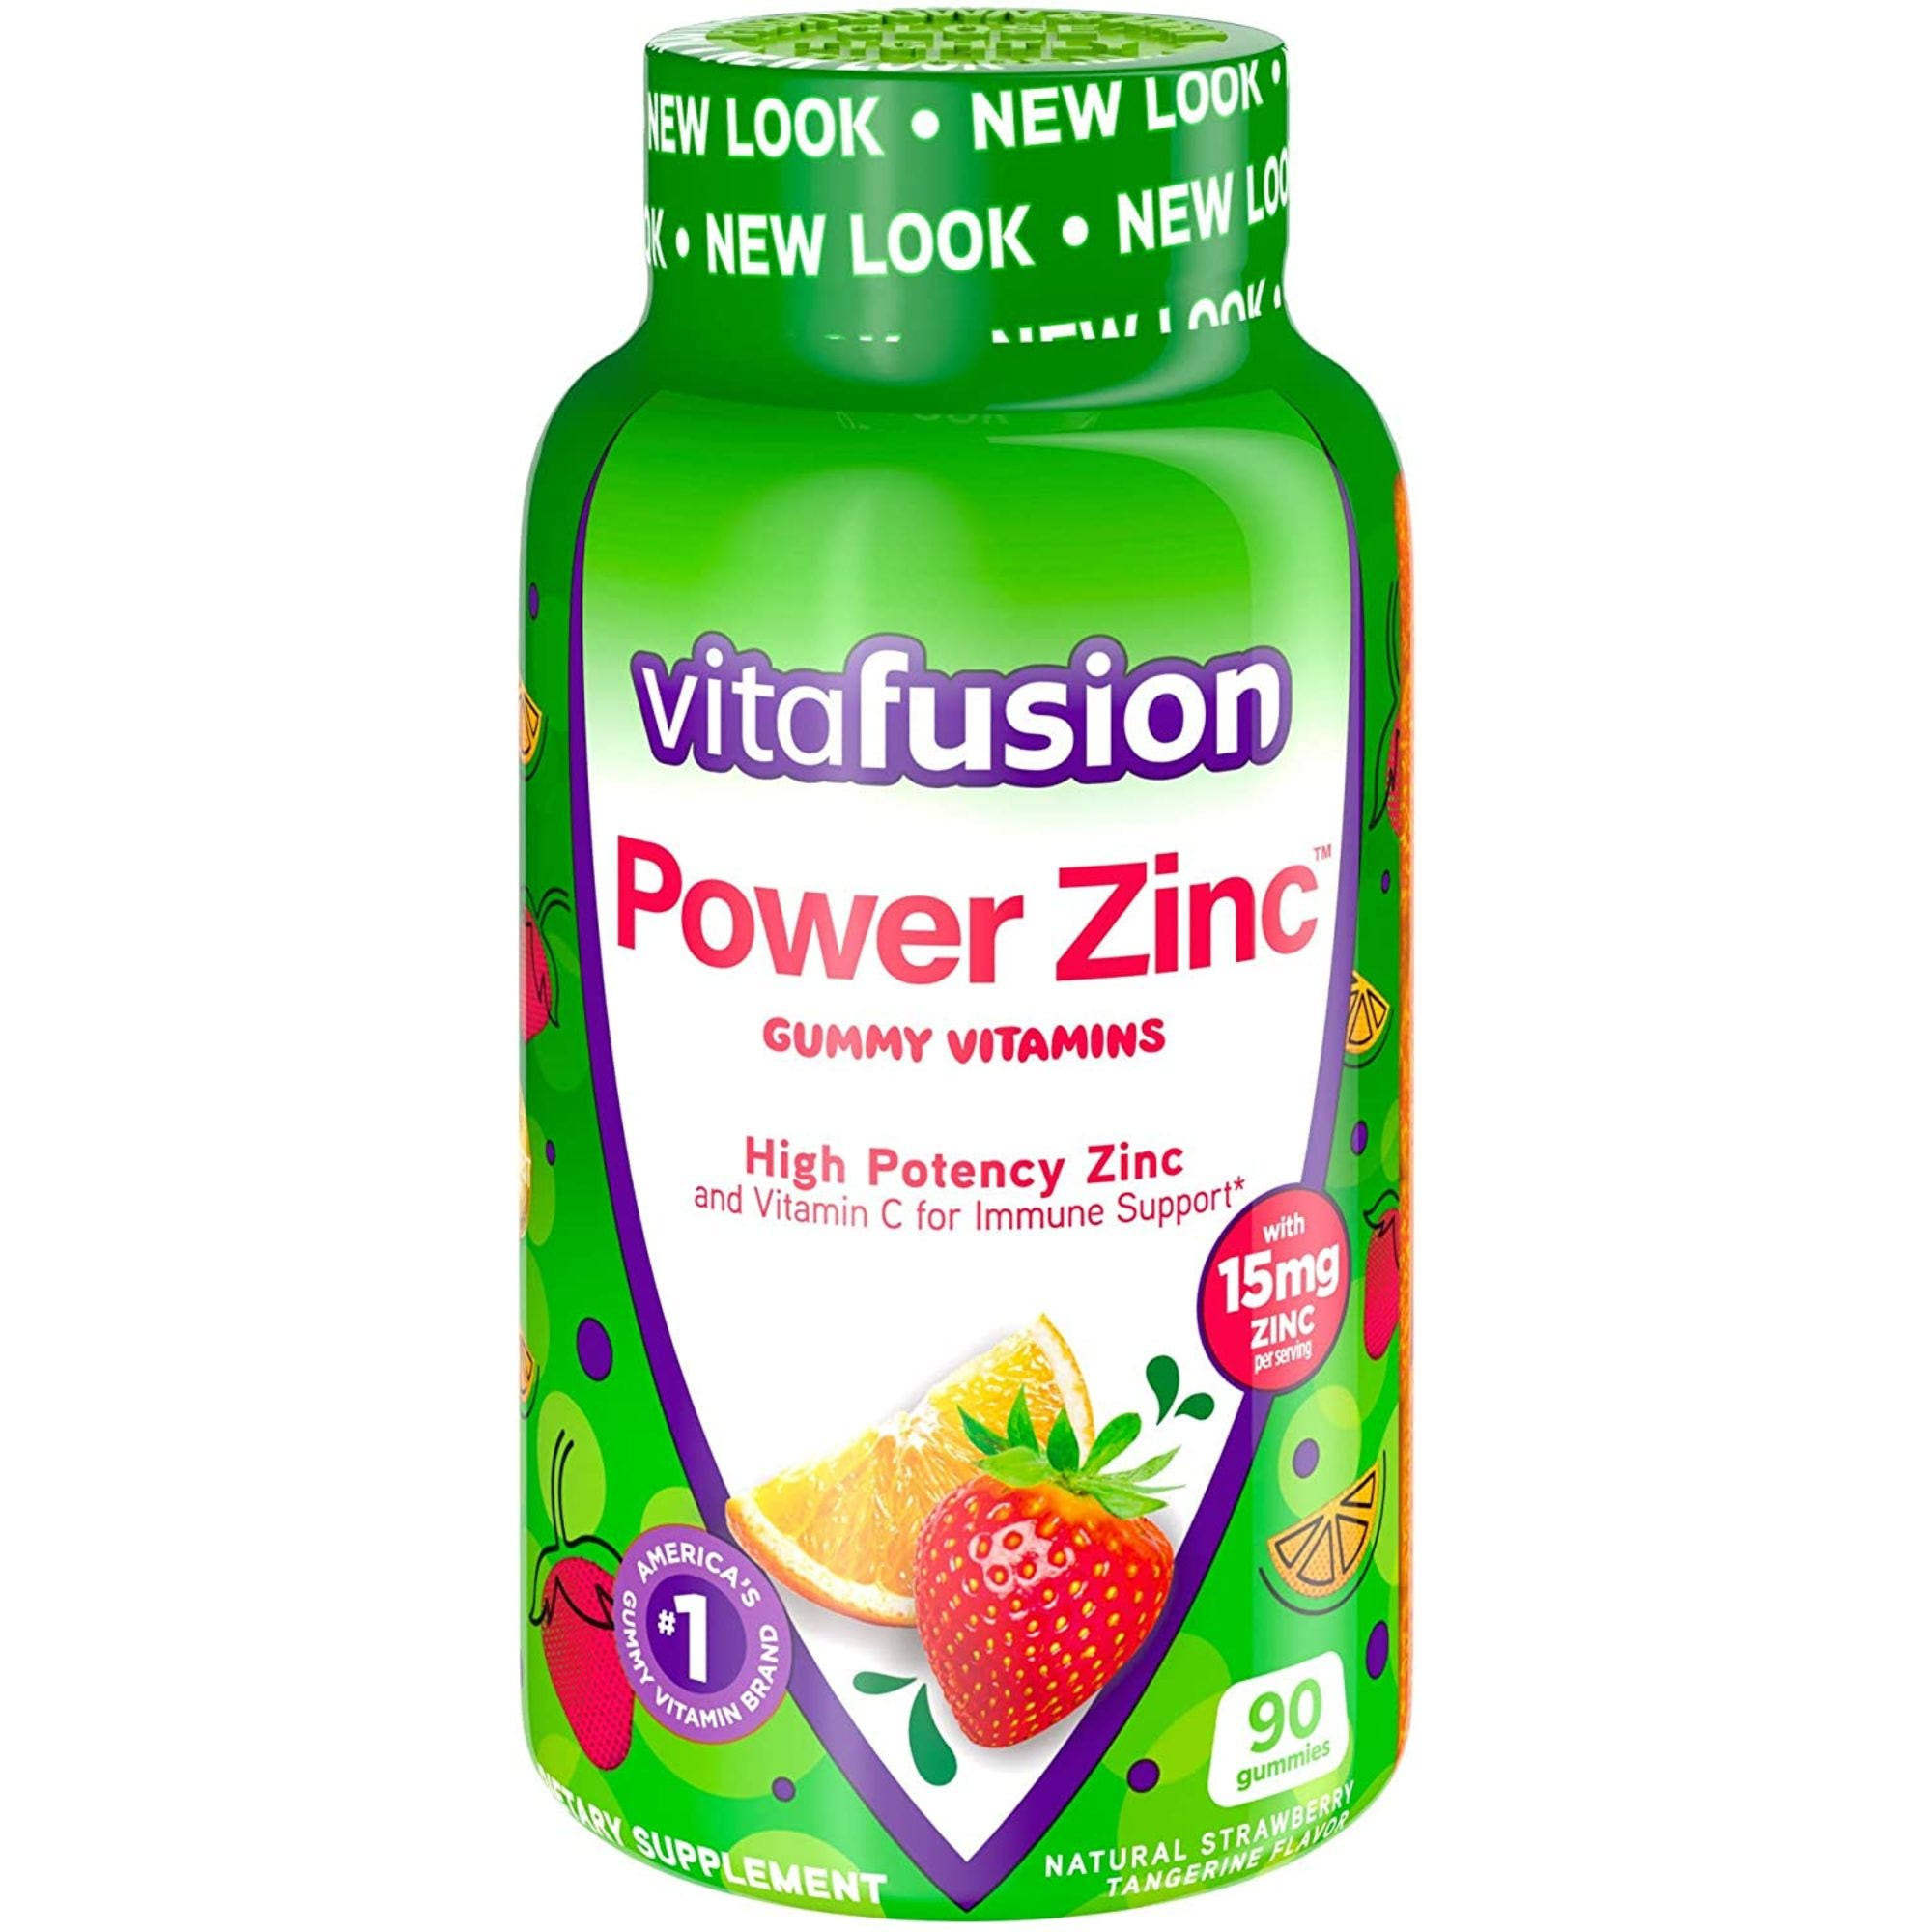 Vitafusion Power Zinc Gummy Vitamins